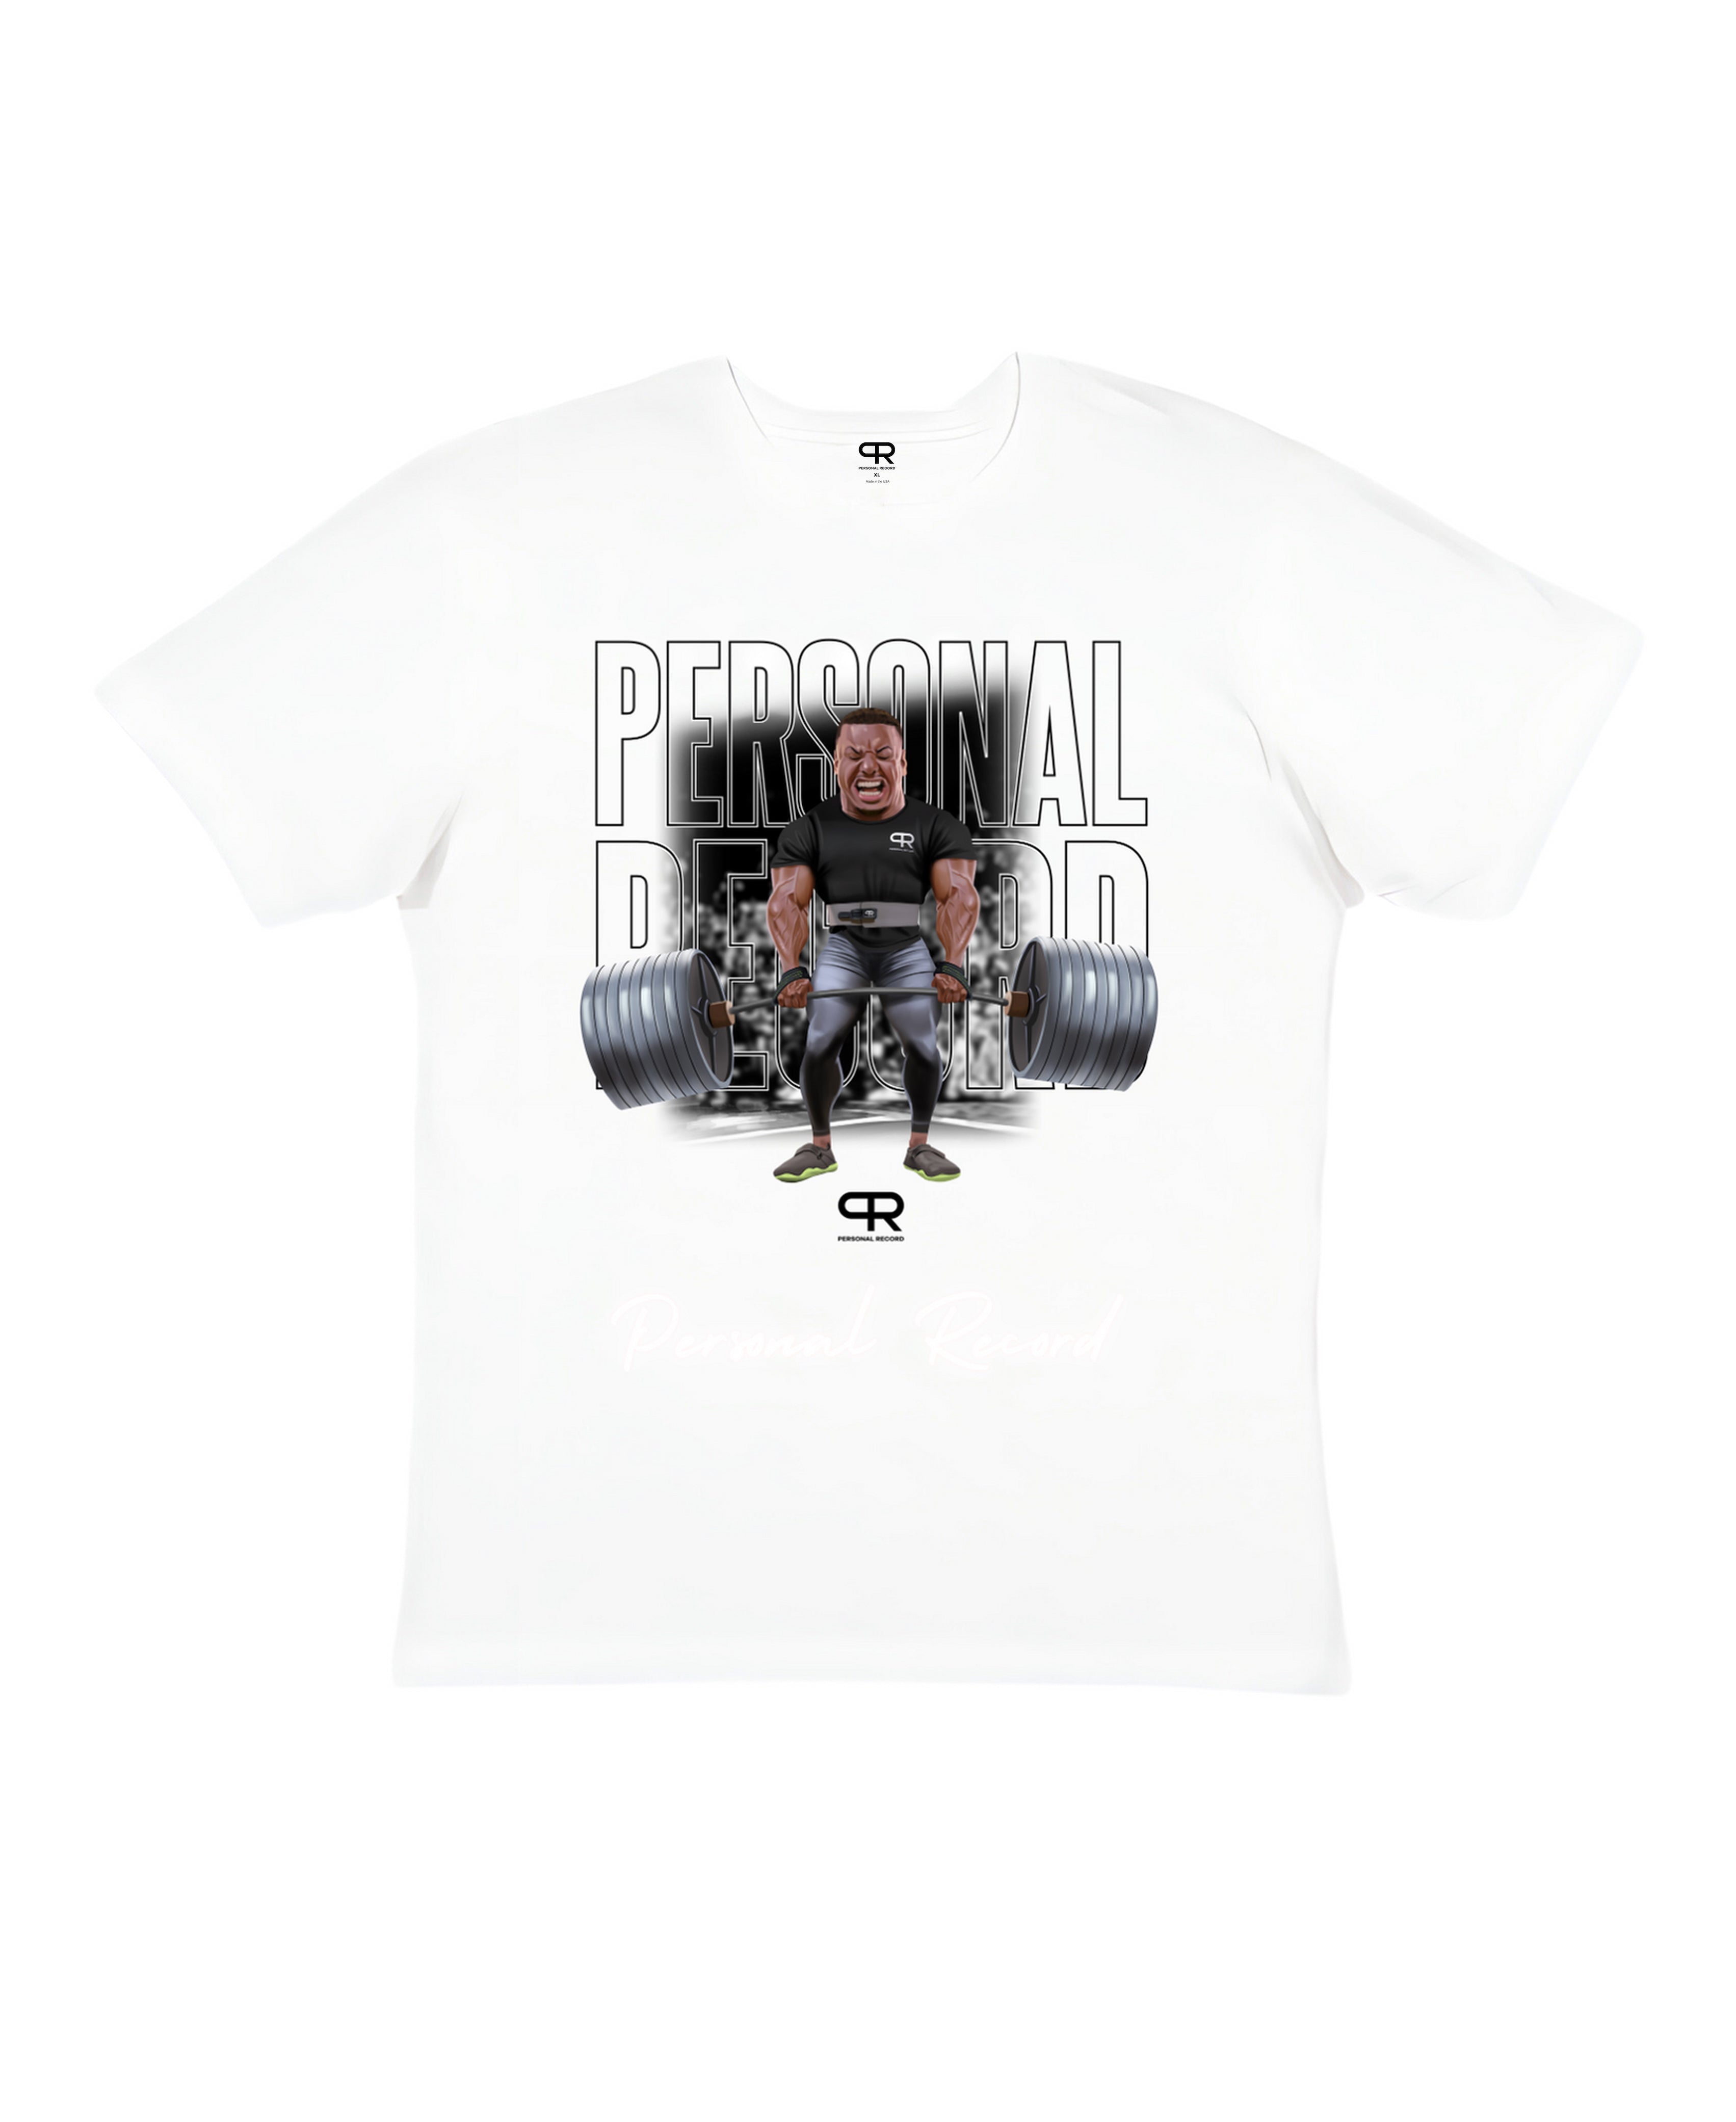 Larry Wheels 935lb Deadlift PR Character Drawing T-Shirt - PR411 - WHITE